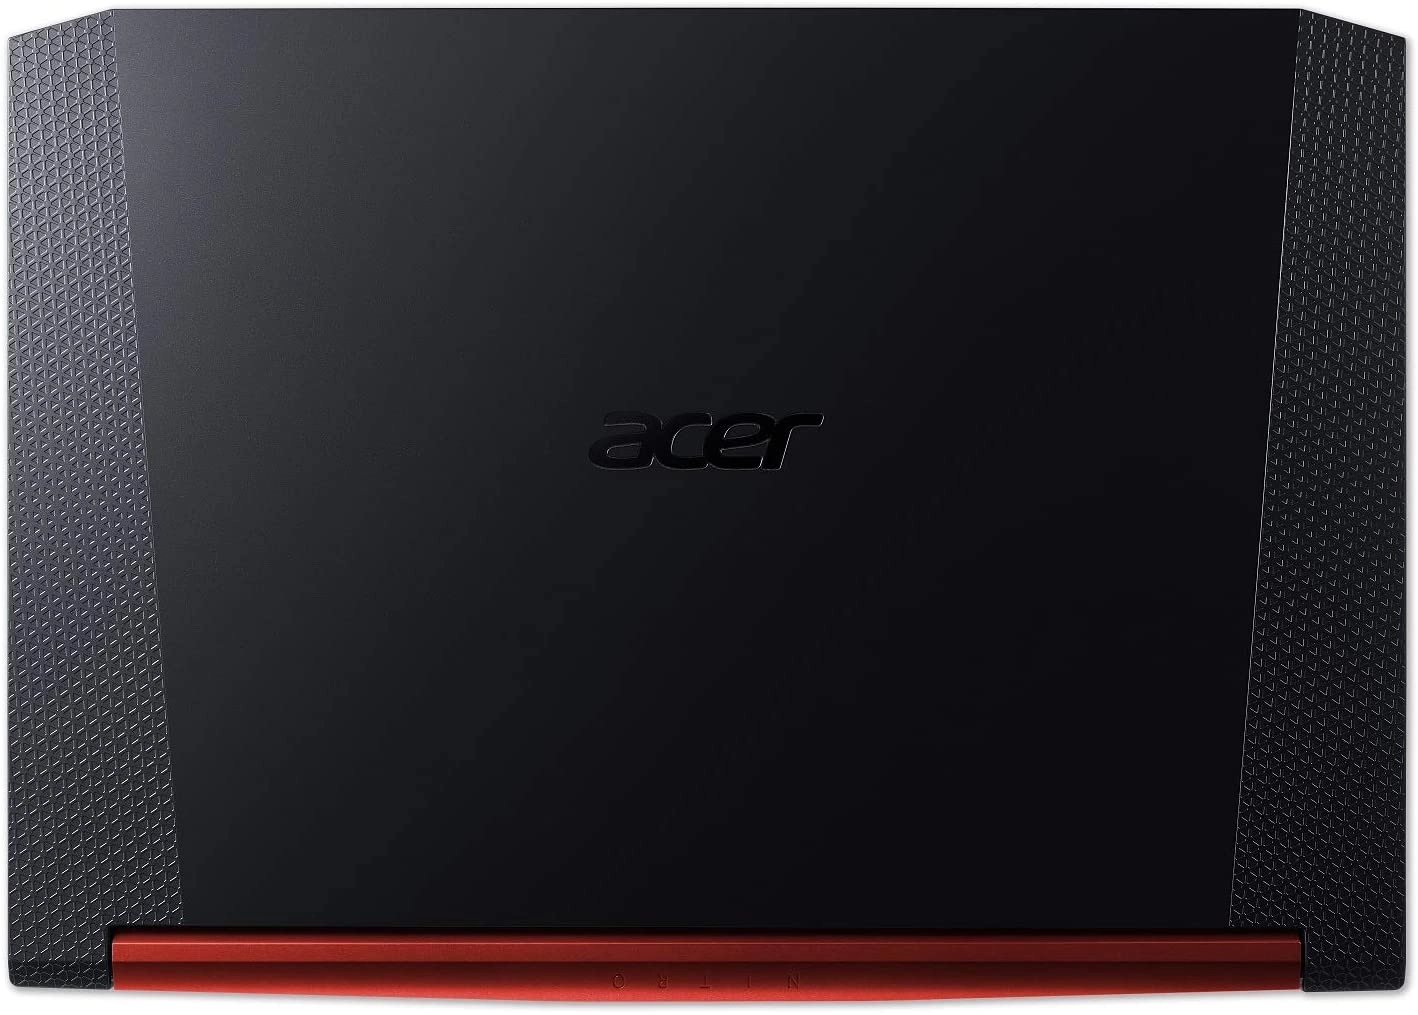 Acer AN515-54-728C laptop image